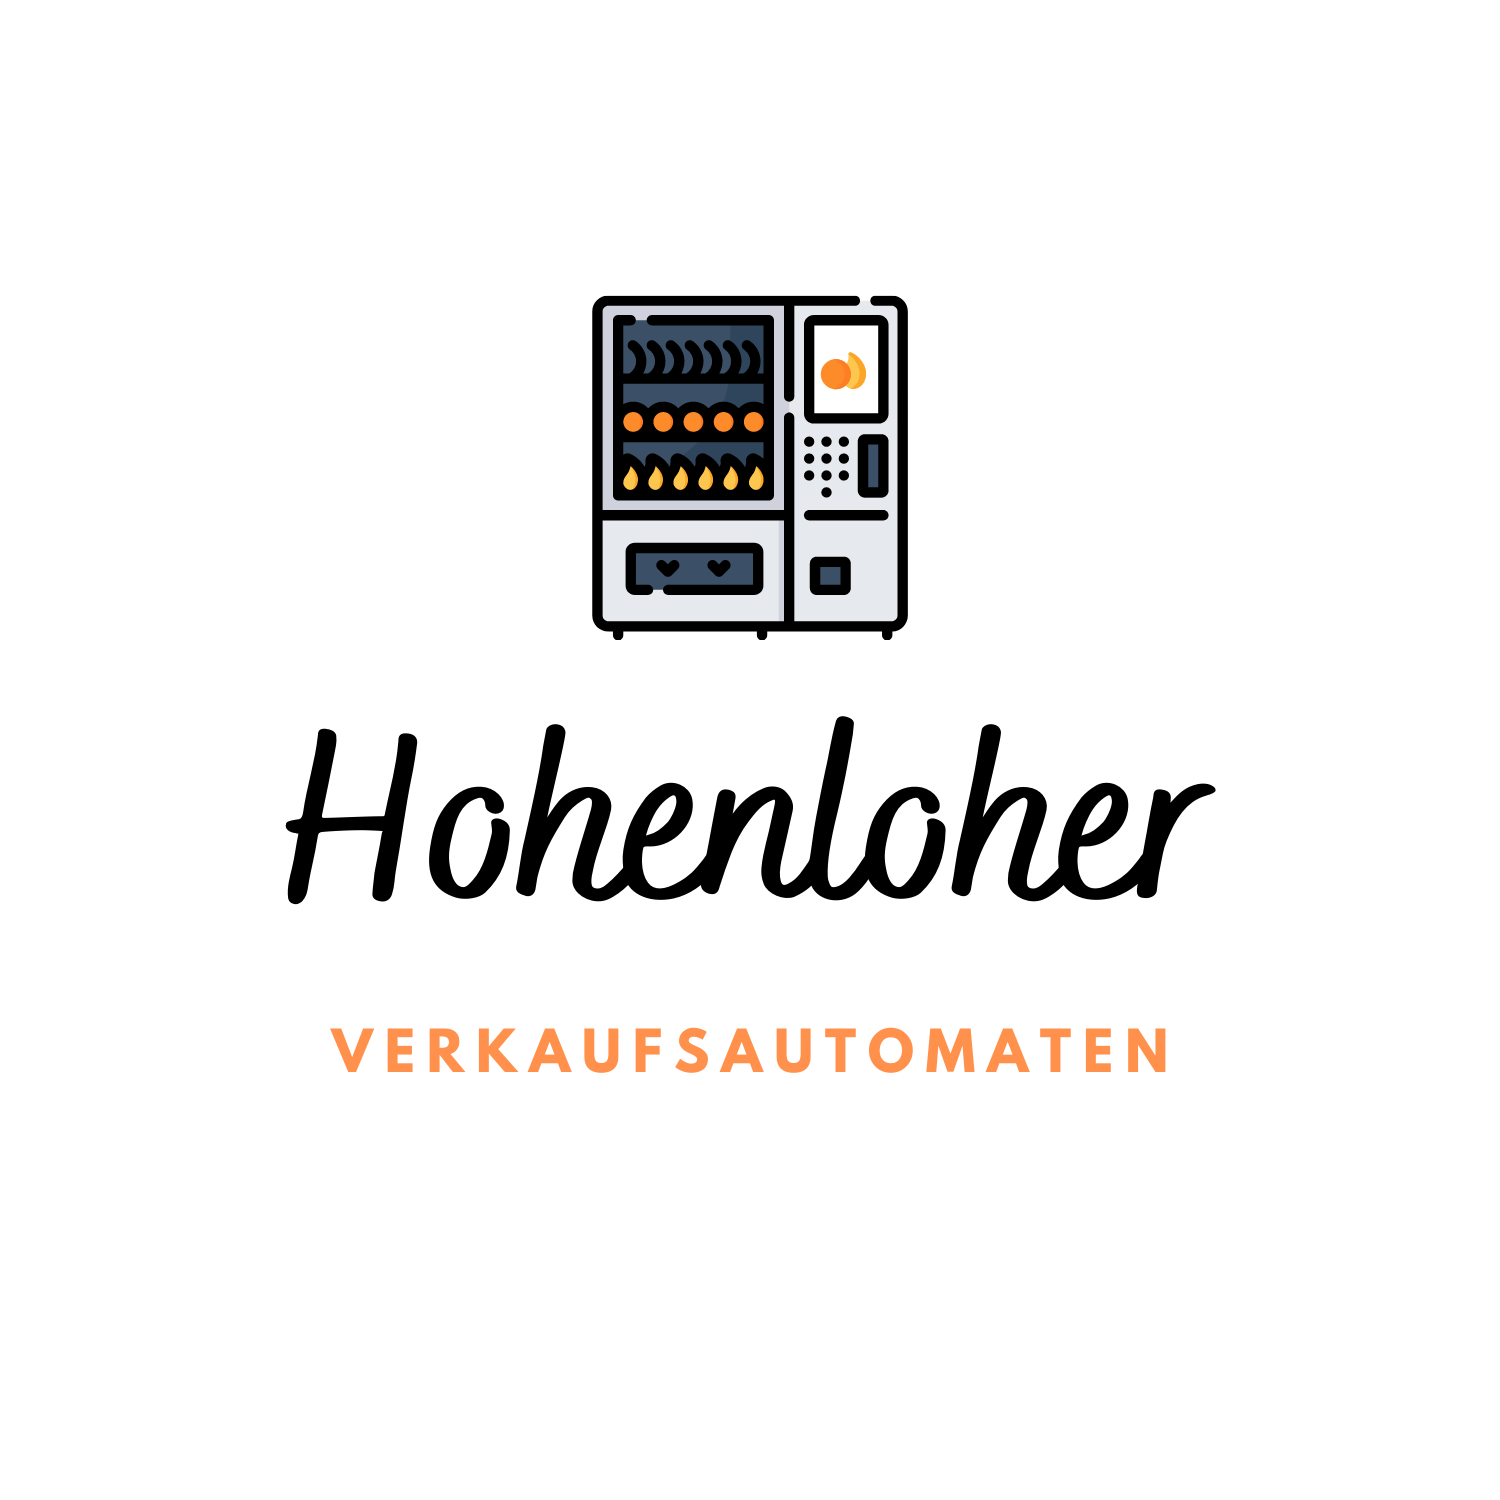 Hohenloher Verkaufsautomaten GmbH in Schrozberg